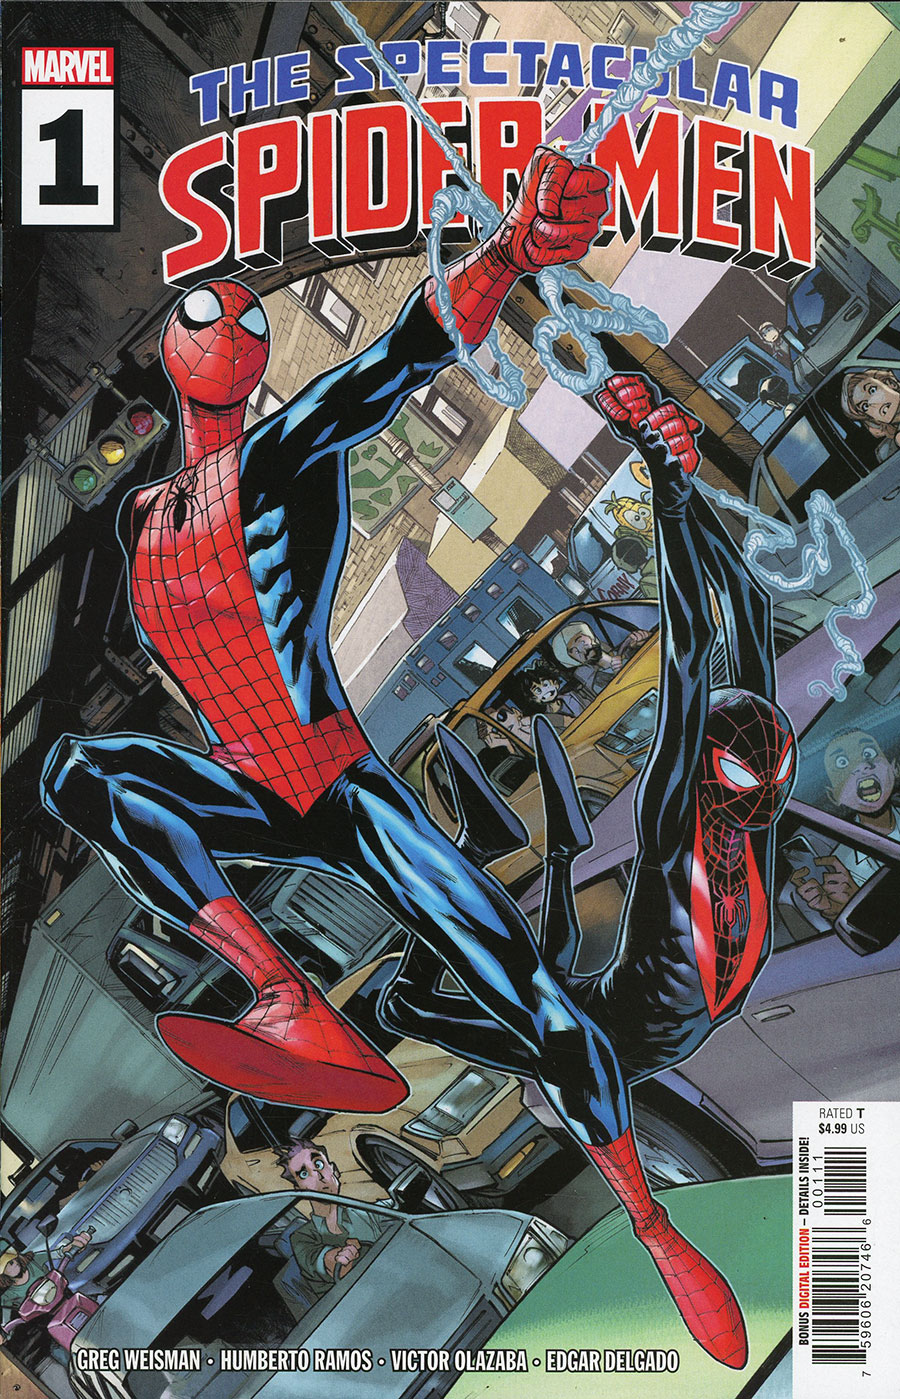 Spectacular Spider-Men #1 Cover A Regular Cover